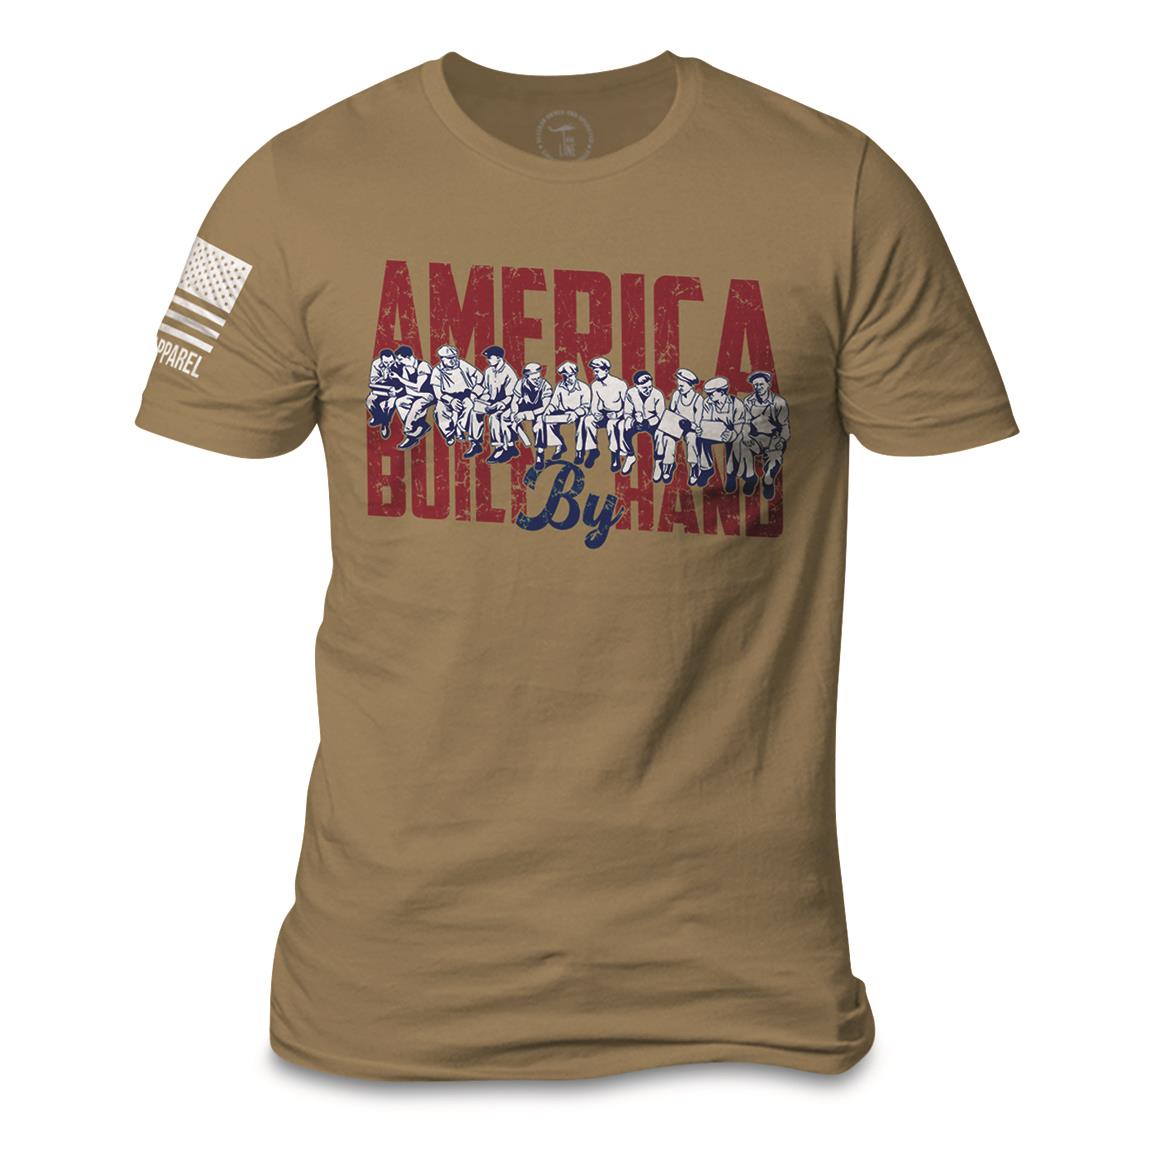 Nine Line Men's America Built By Hand Short Sleeve T-shirt, Coyote